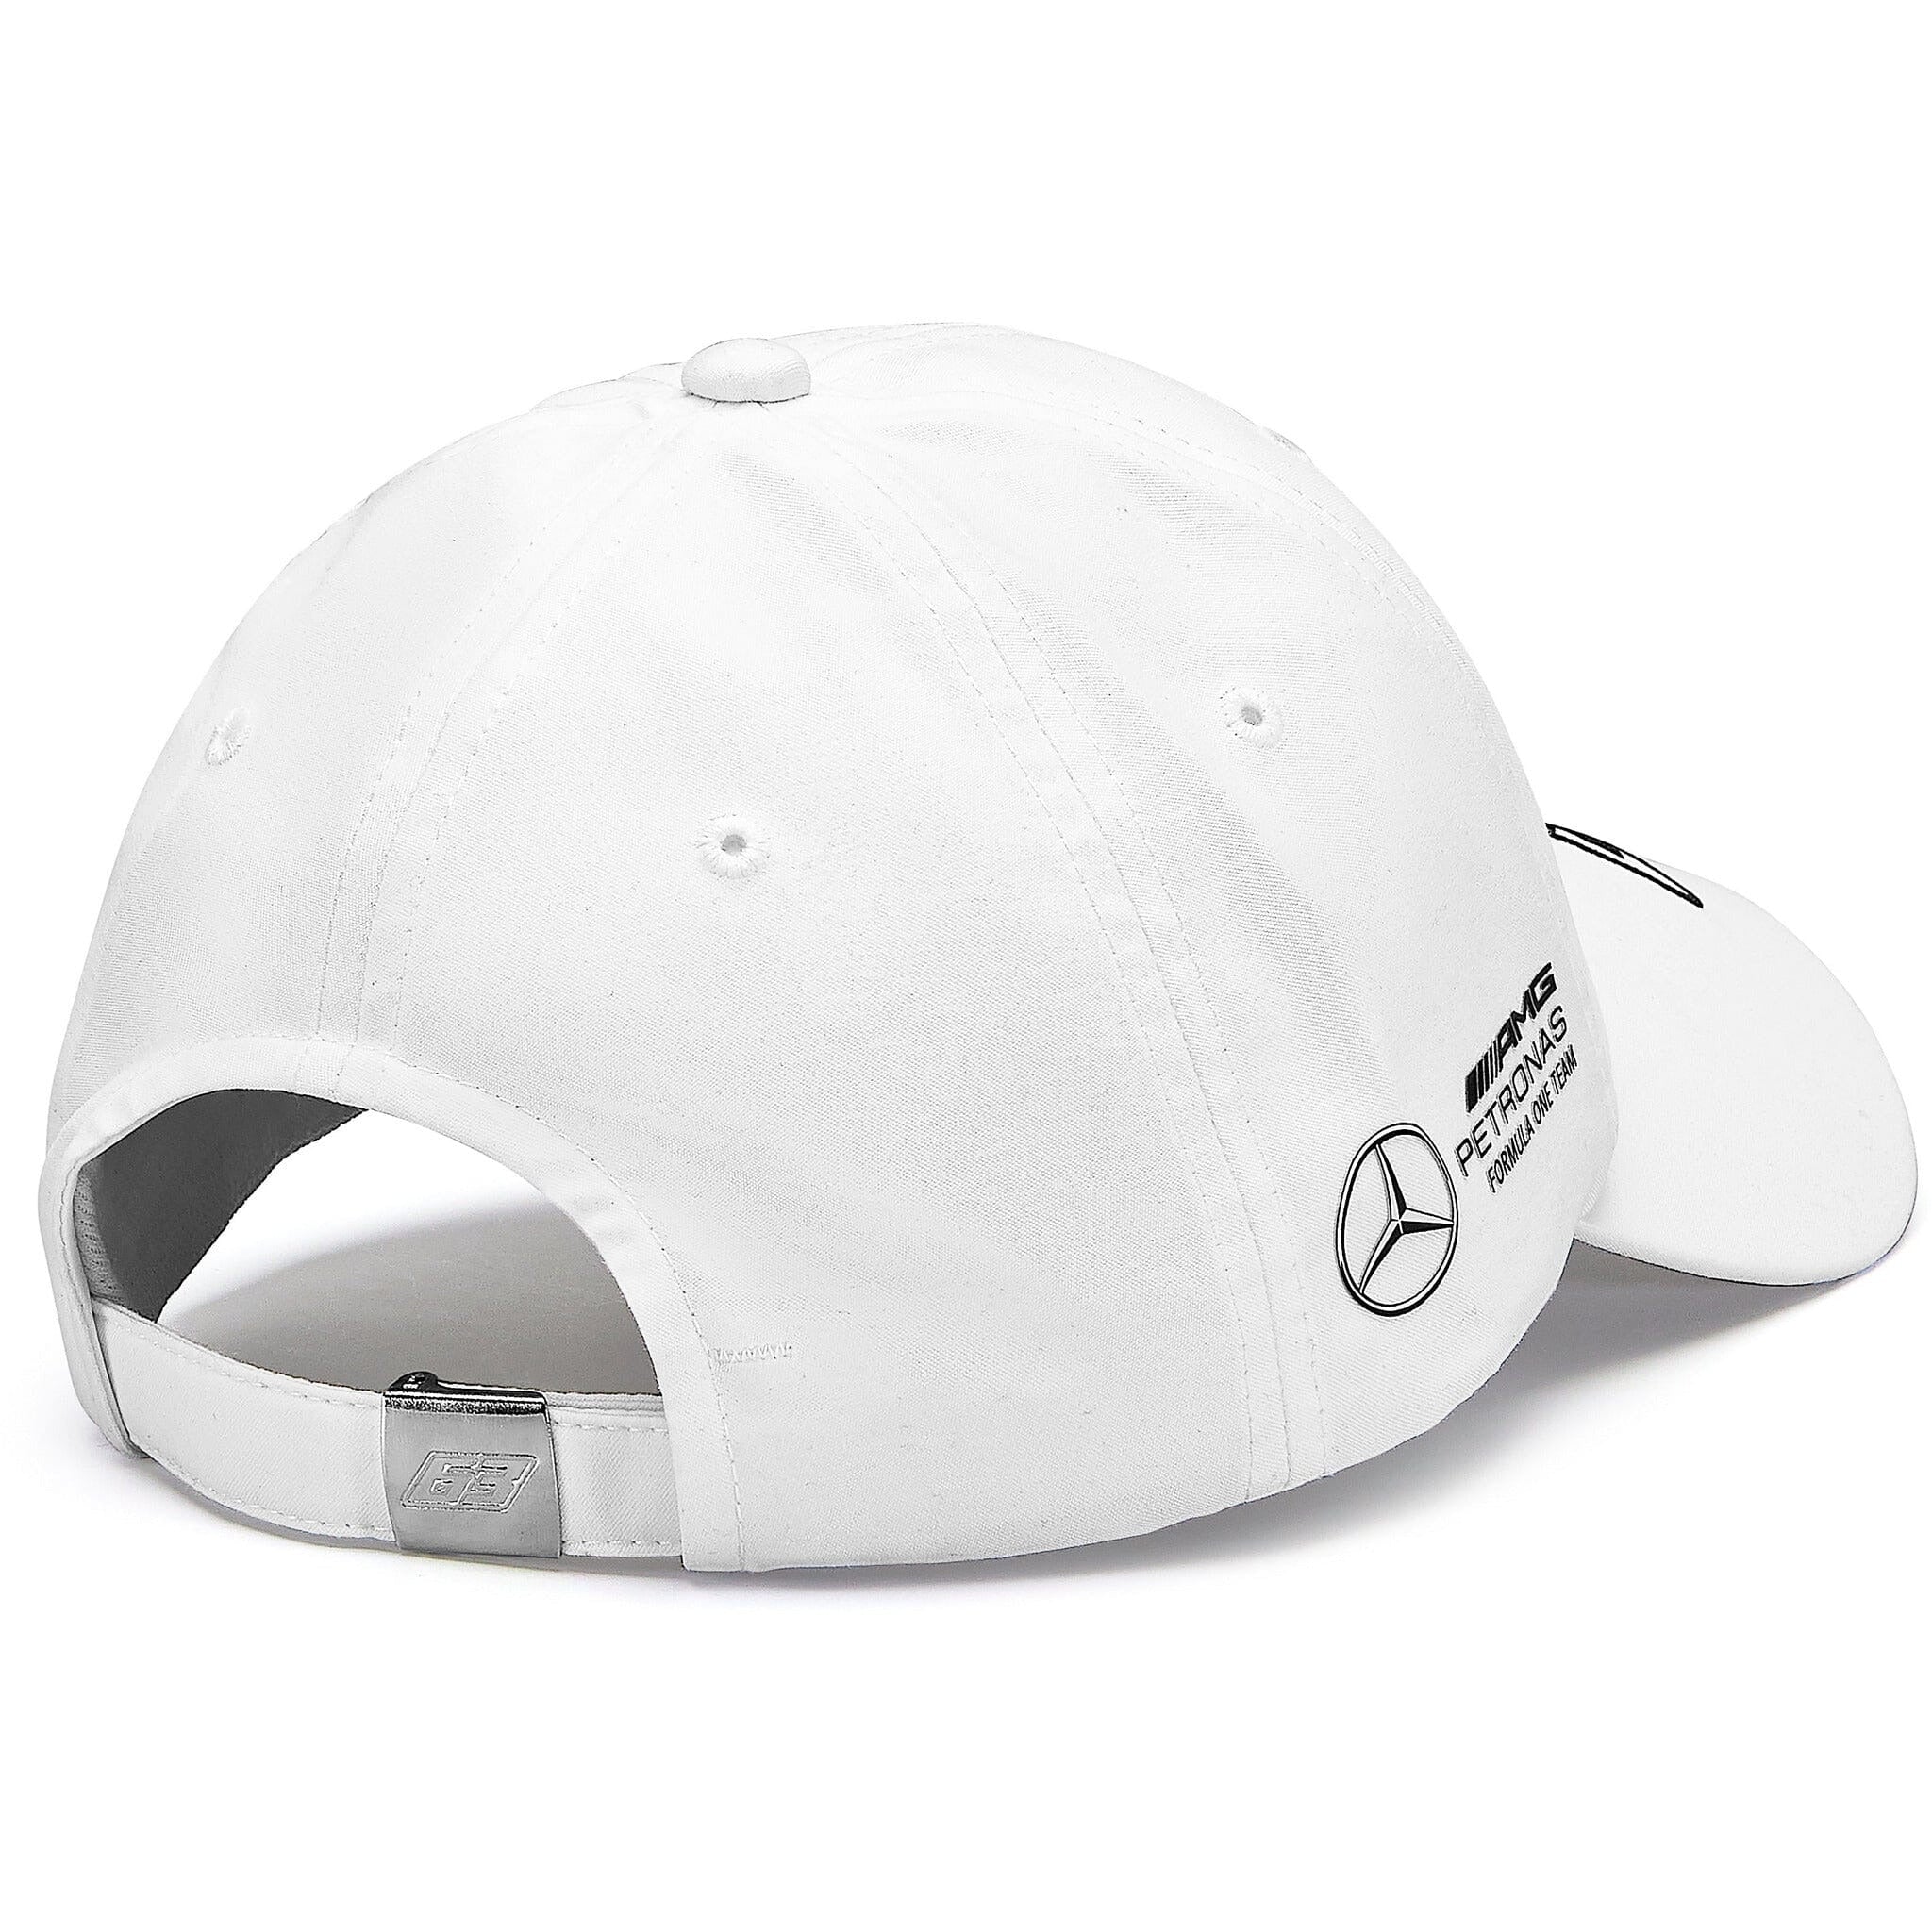 Mercedes AMG Petronas F1 Kid's George Russell Baseball Hat White